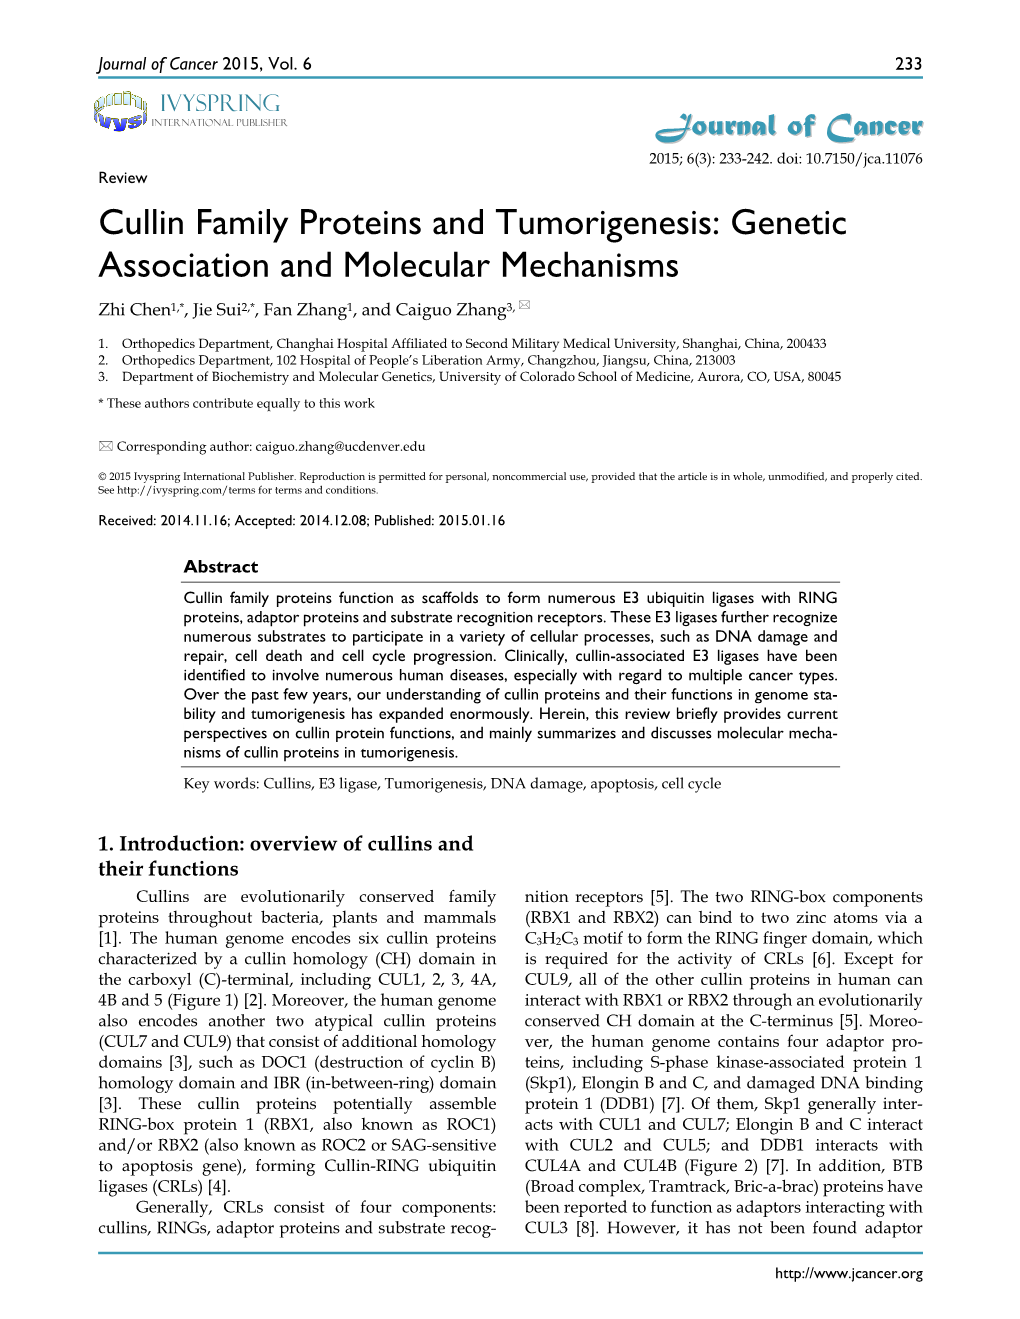 Cullin Family Proteins and Tumorigenesis: Genetic Association and Molecular Mechanisms Zhi Chen1,*, Jie Sui2,*, Fan Zhang1, and Caiguo Zhang3, 